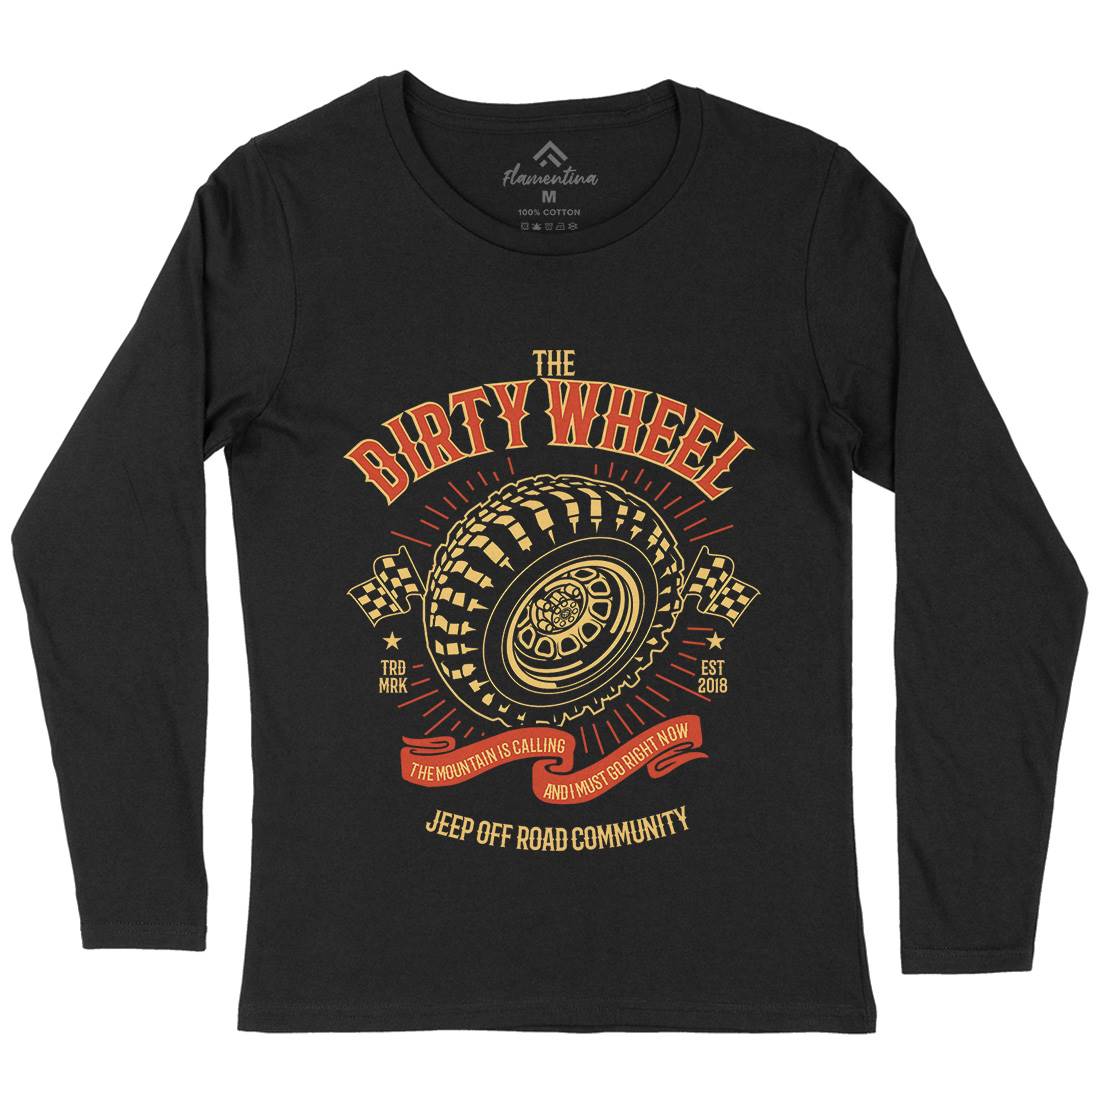 The Dirty Wheel Womens Long Sleeve T-Shirt Cars B262